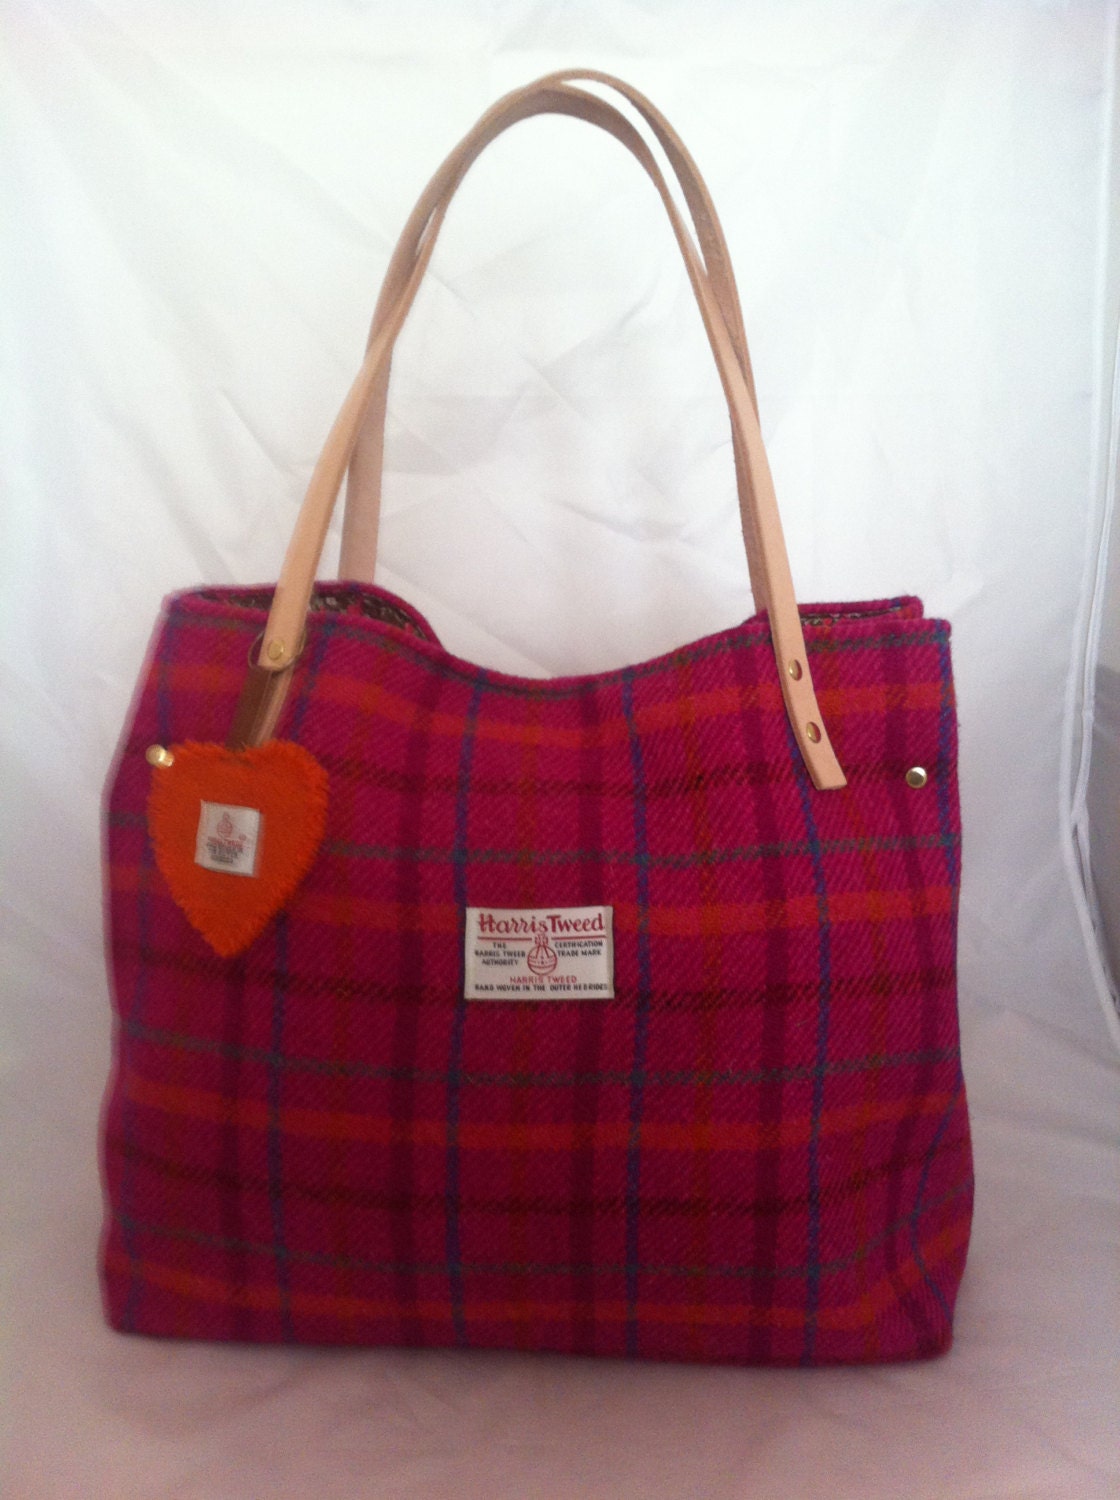 Harris tweed bag purse tote made in Scotland pink plaid tartan | Etsy